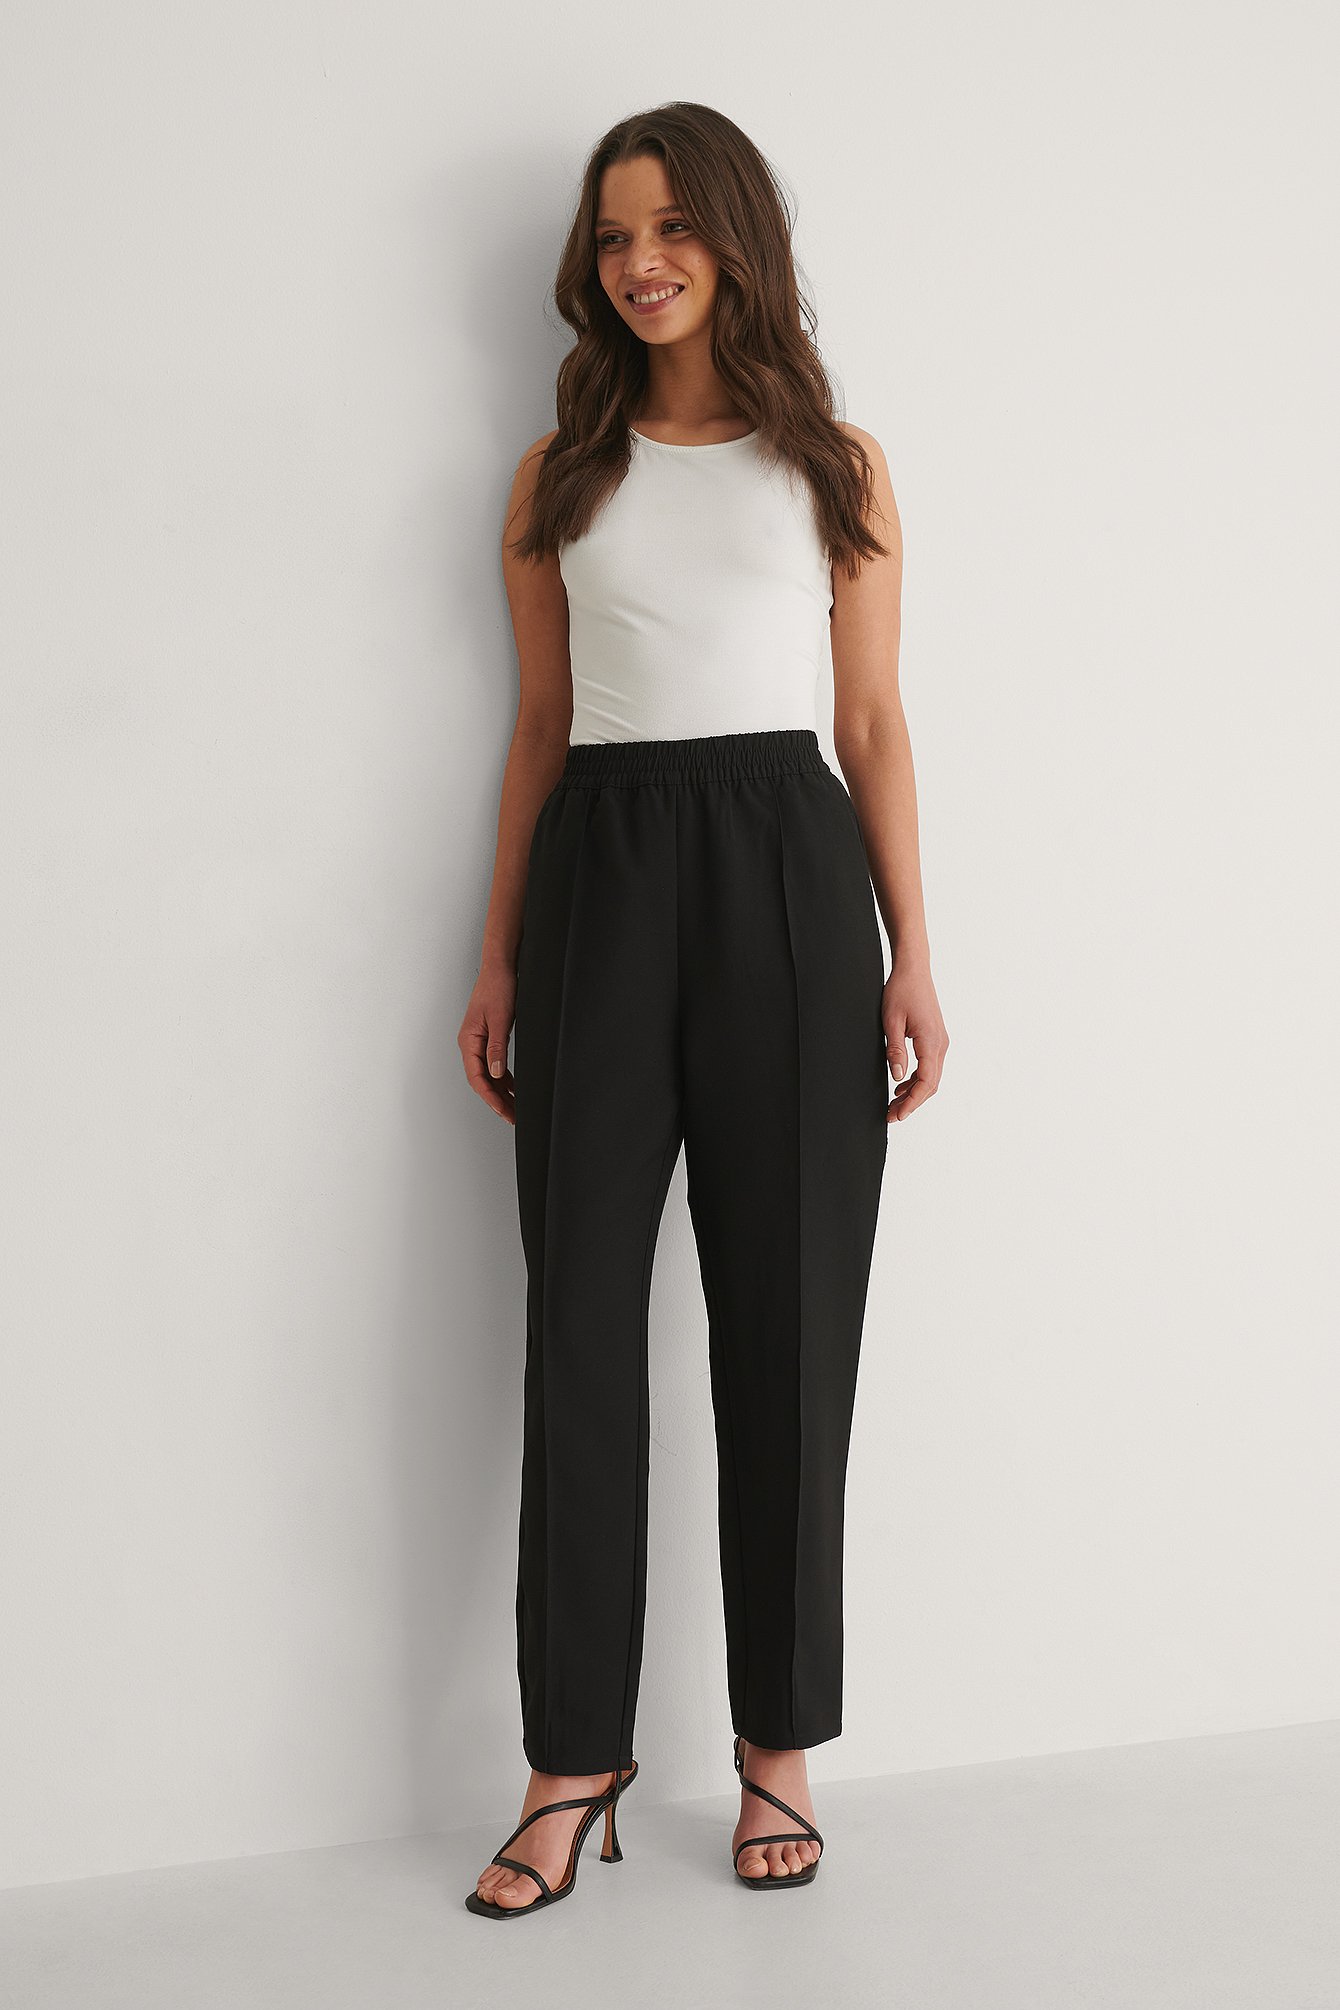 Olivia Mark – High waist cropped work pants | Cropped pants work, Pants for  women, Work pants